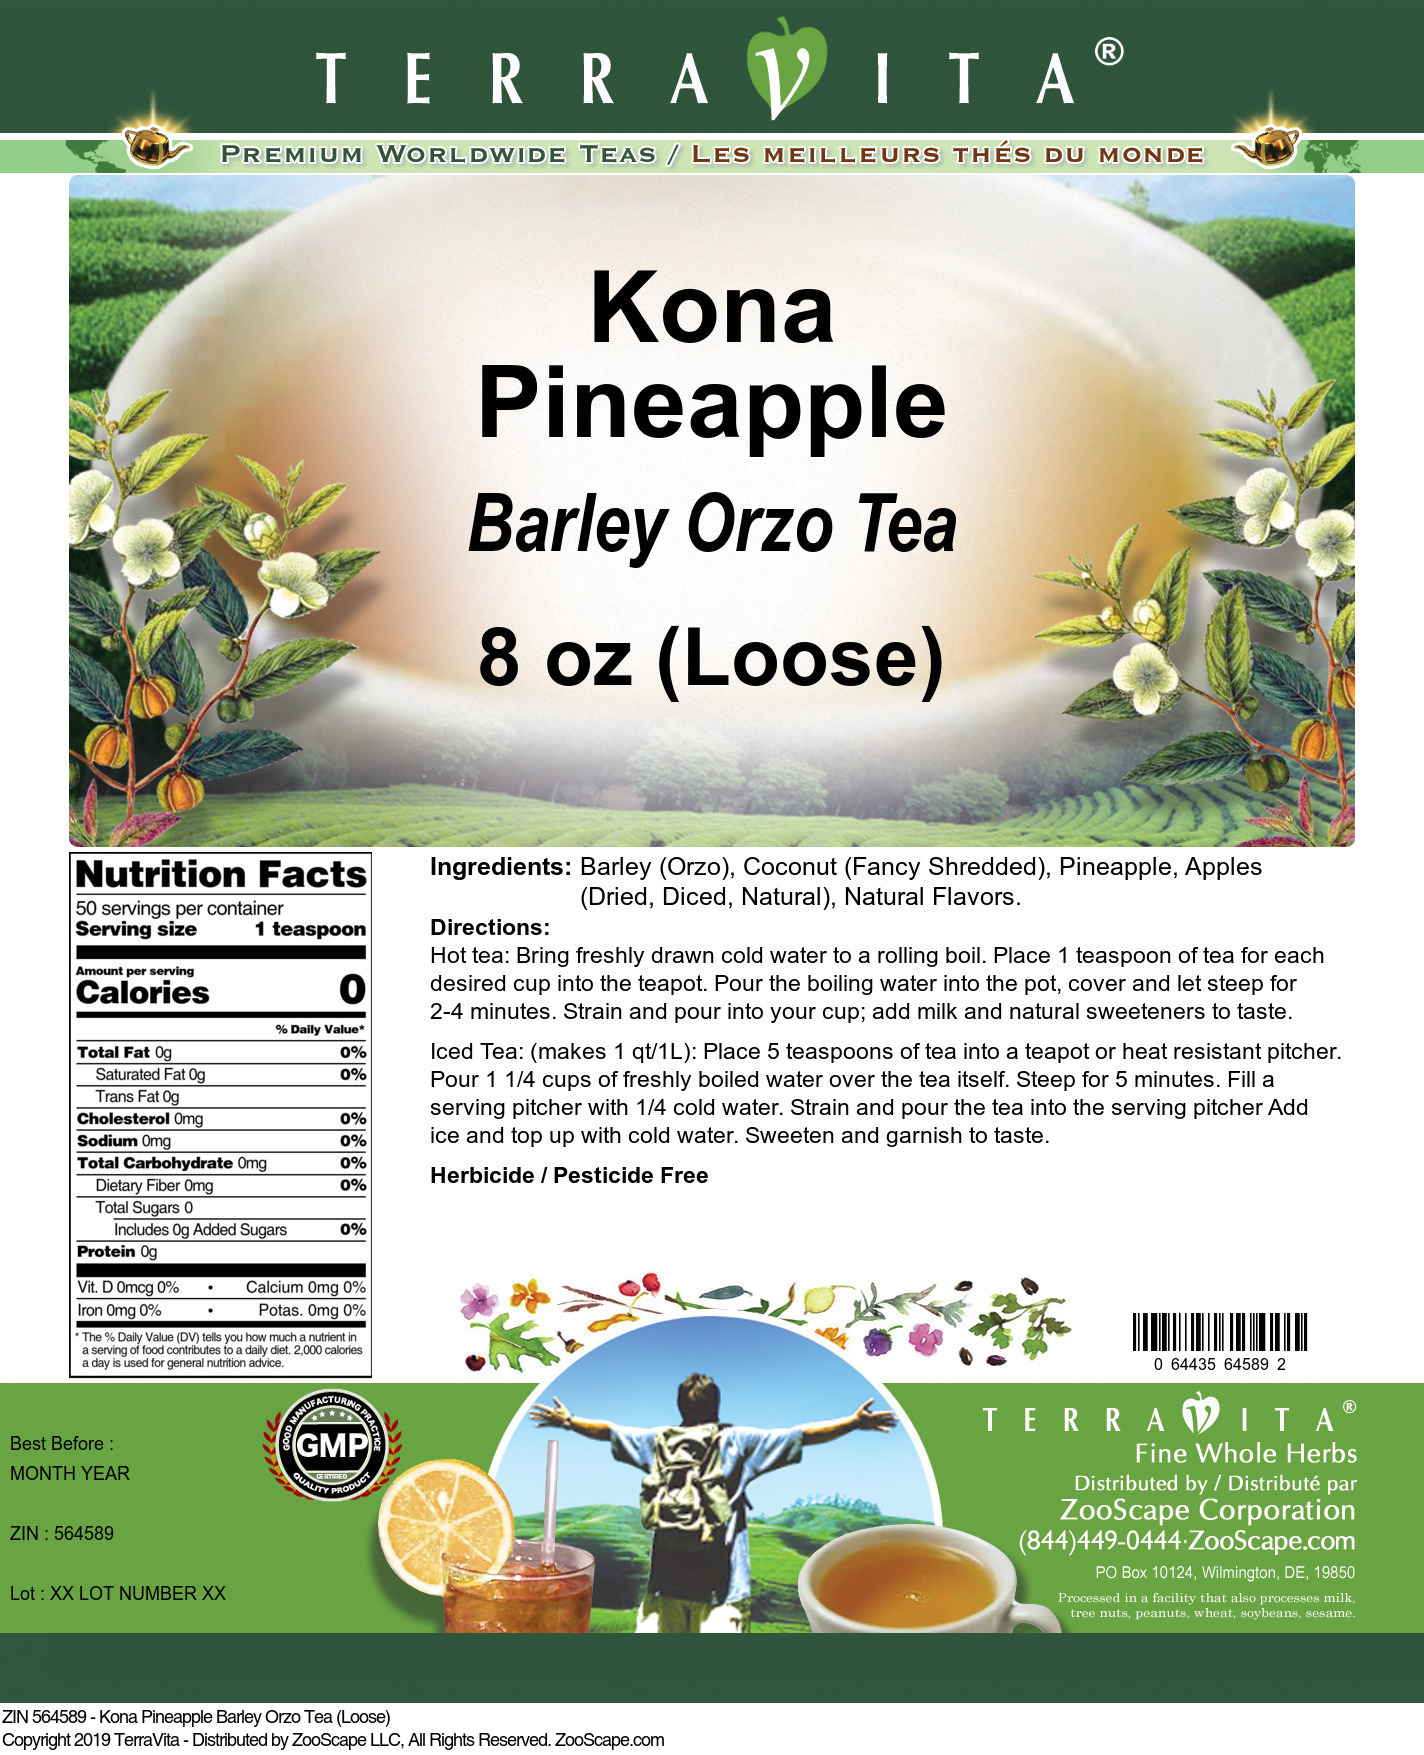 Kona Pineapple Barley Orzo Tea (Loose) - Label